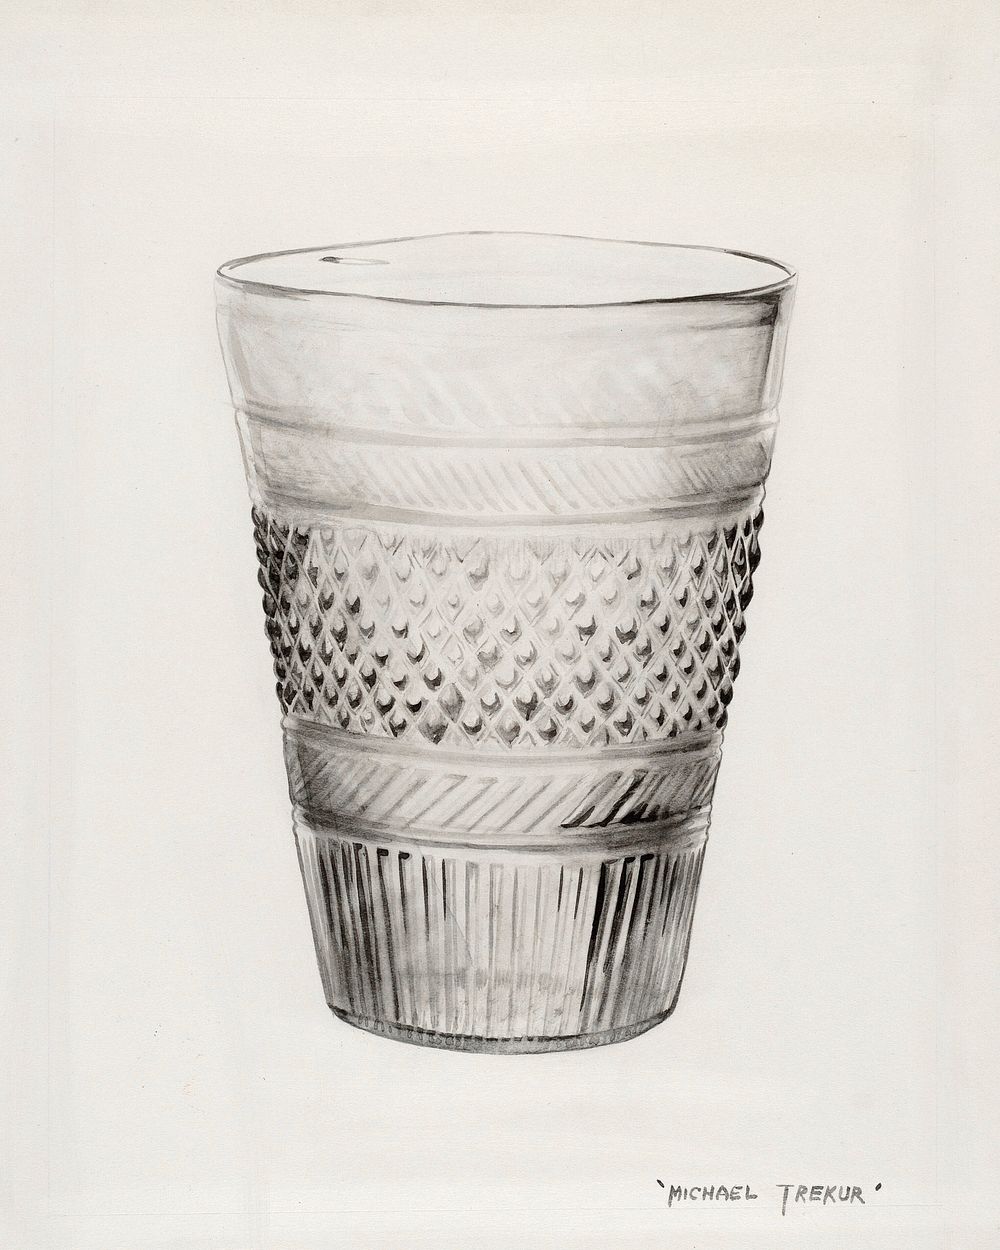 Flip Glass (ca. 1936) by Michael Trekur. Original from The National Gallery of Art. Digitally enhanced by rawpixel.